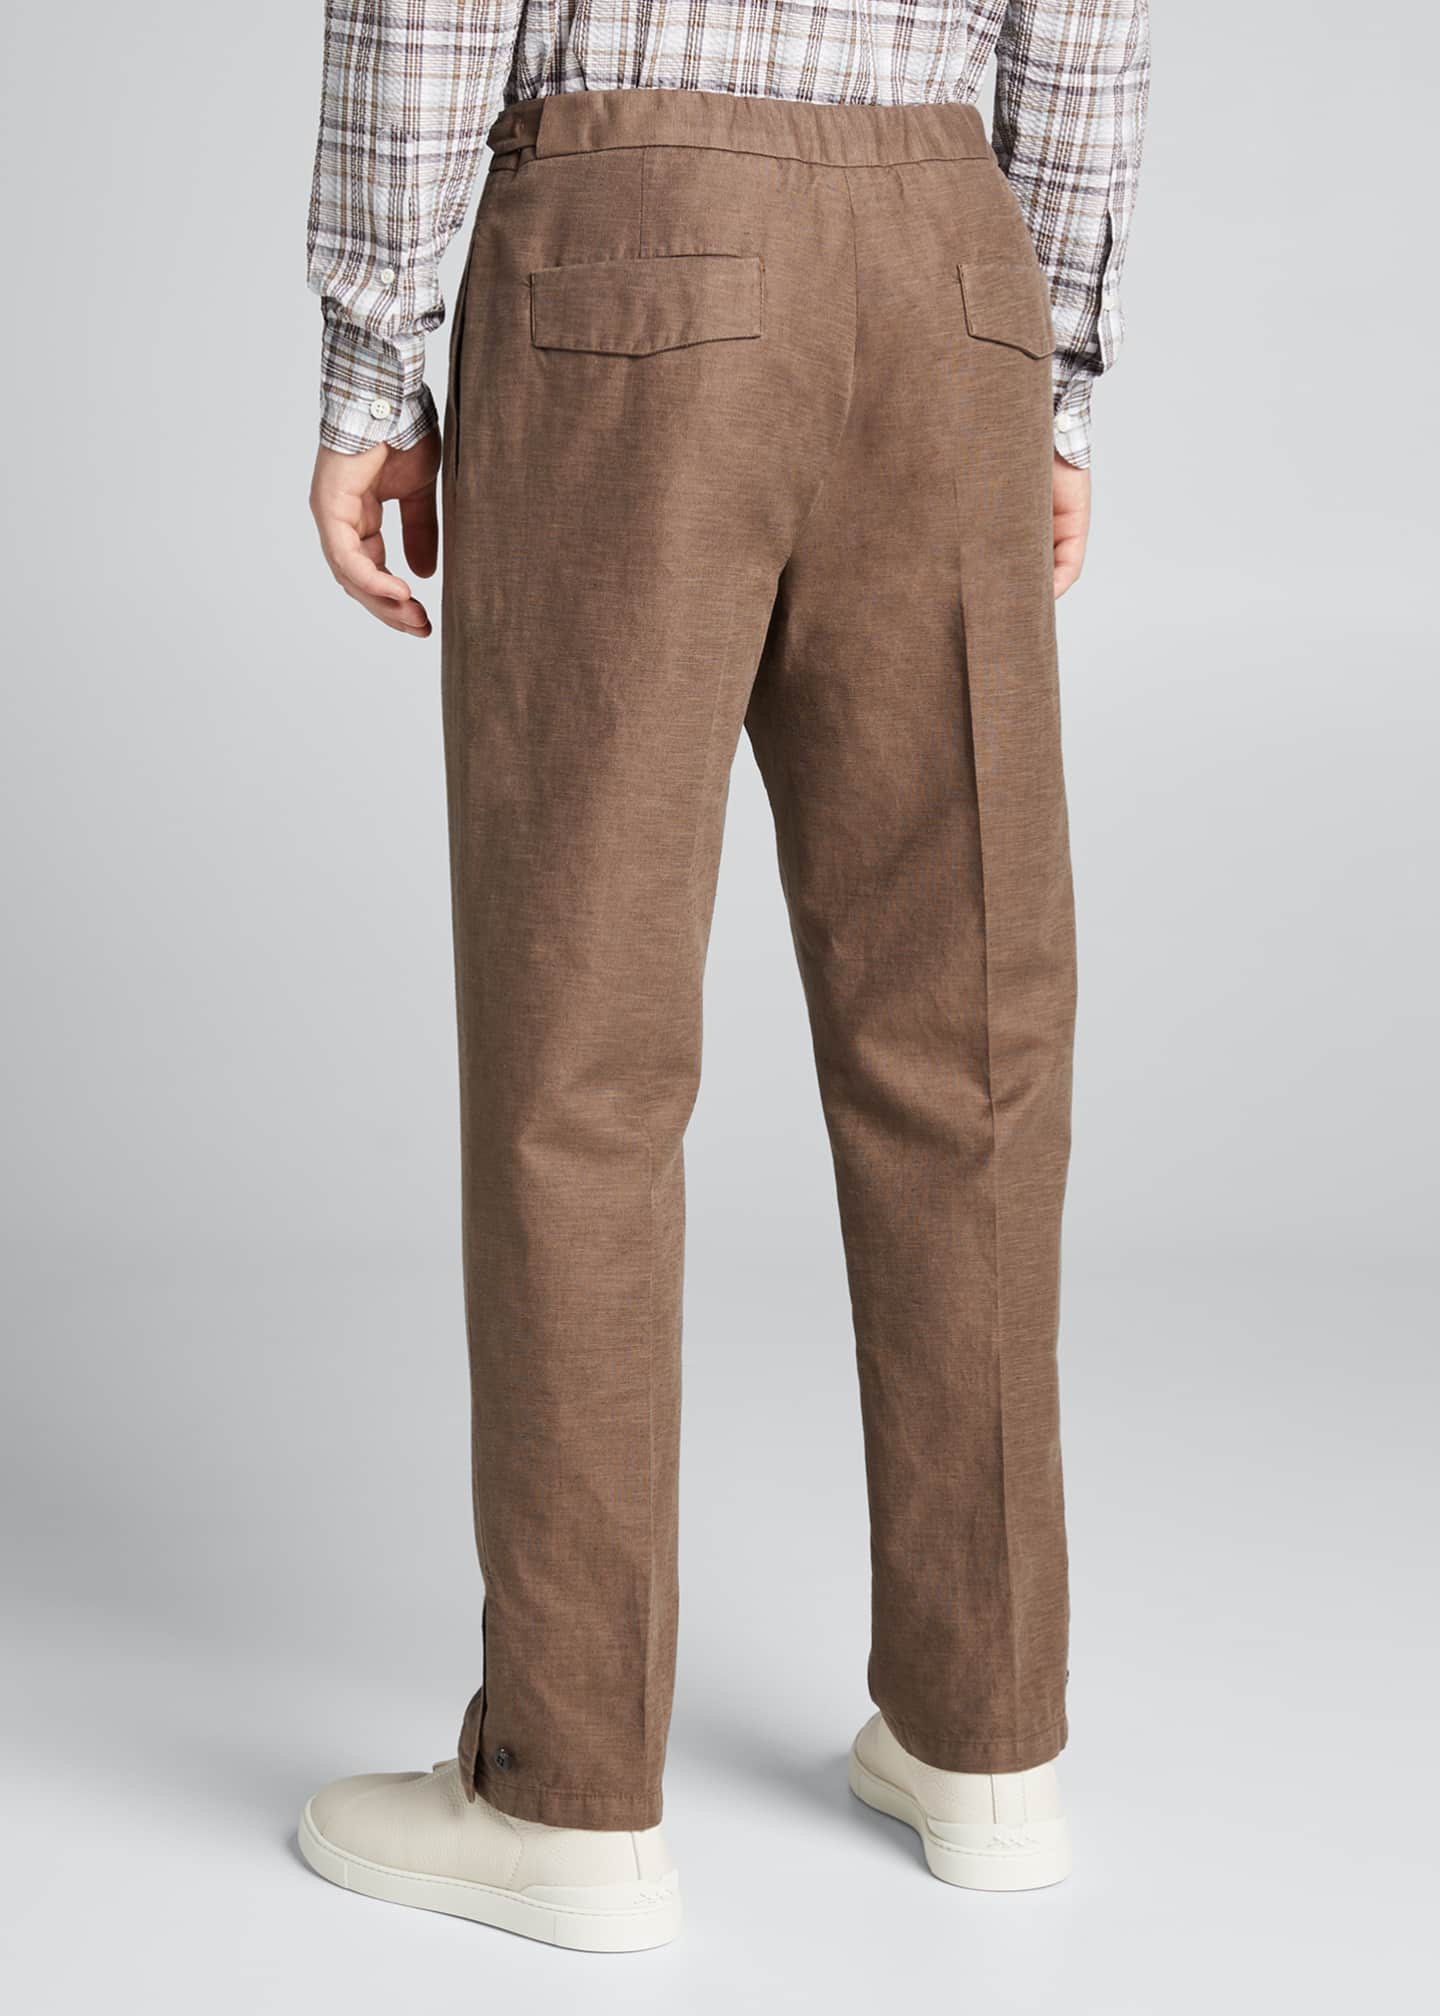 ZEGNA Men's Pleated Side-Adjuster Pants - Bergdorf Goodman